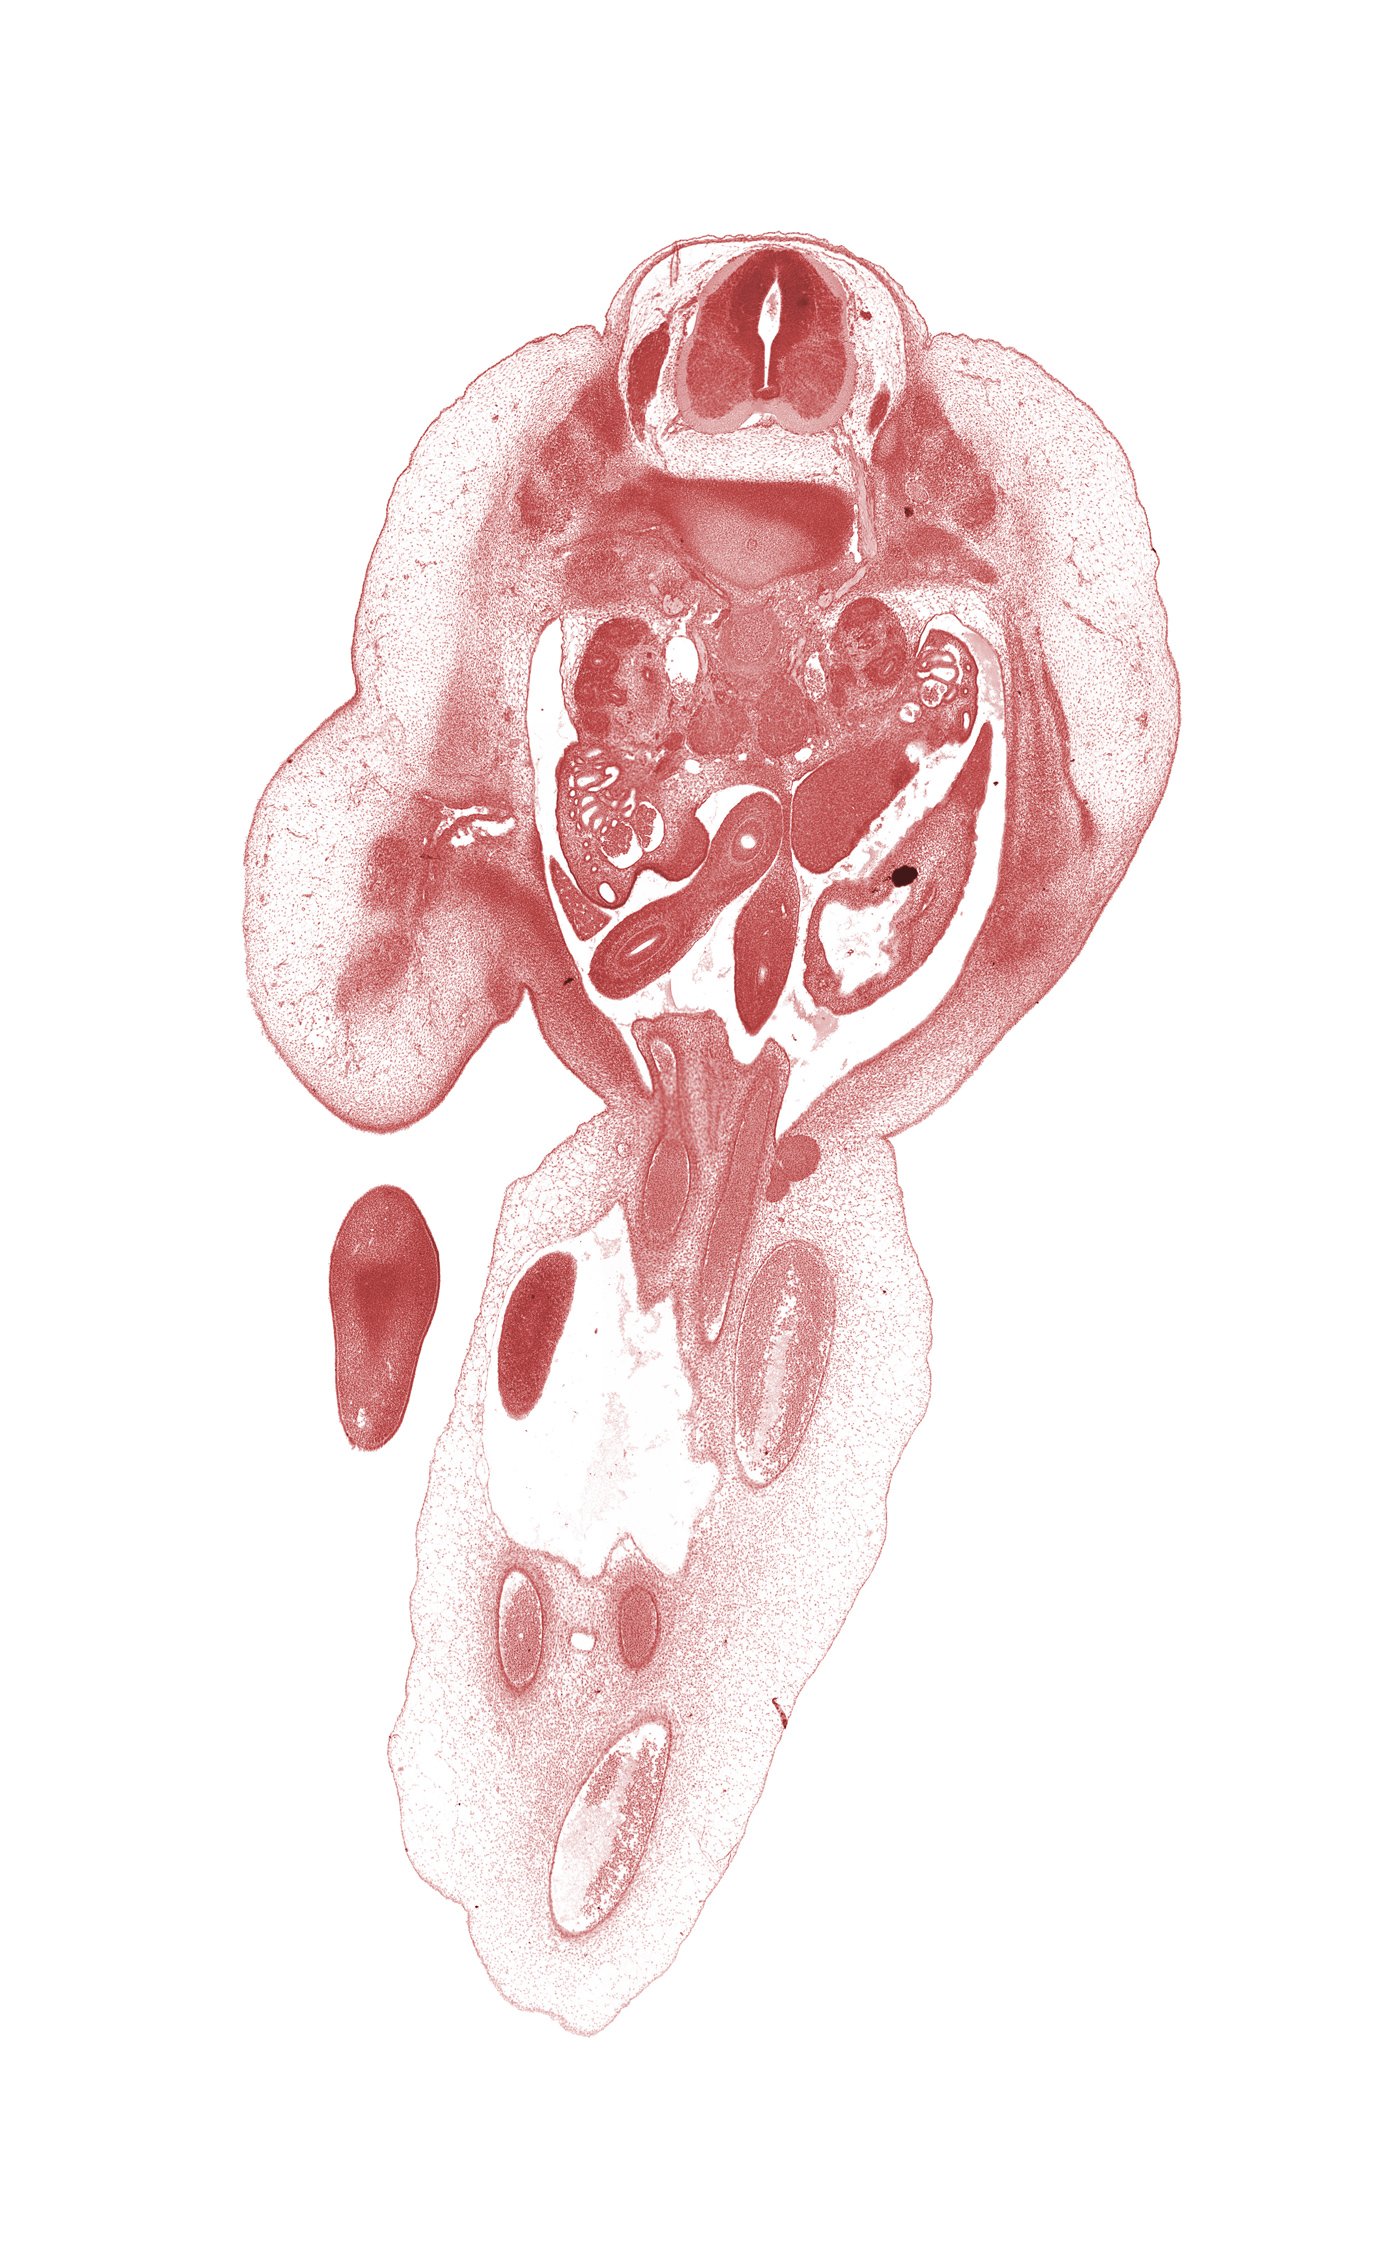 L-1 / L-2 intervertebral disc, L-1 spinal nerve, T-12 / L-1 interganglion region, allantois, amnion, aorta, caudal edge of herniated midgut, caudal edge of lesser sac (omental bursa), caudal edge of right lobe of liver, cephalic edge of L-1 spinal ganglion, dorsal mesogastrium, femoral artery, femoral vein, hindgut, inferior mesenteric artery, junction of allantois and apex of urinary bladder, kidney (metanephros), left umbilical artery, mesonephric duct, mesonephros, ovary, right umbilical artery, umbilical coelom, umbilical cord, umbilical vein